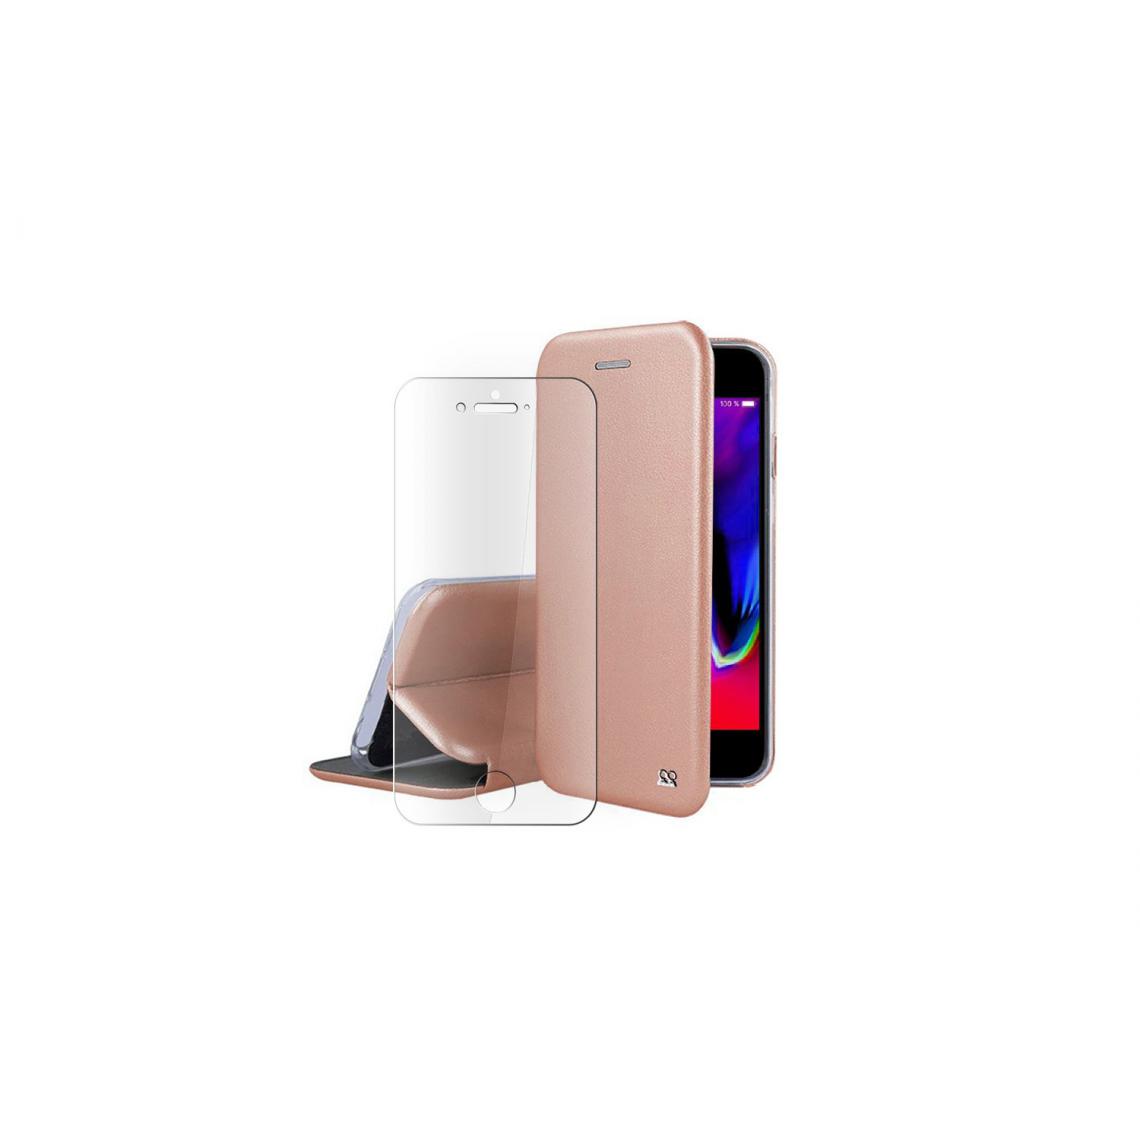 Ibroz - Ibroz Etui en cuir rose + Verre - Coque, étui smartphone